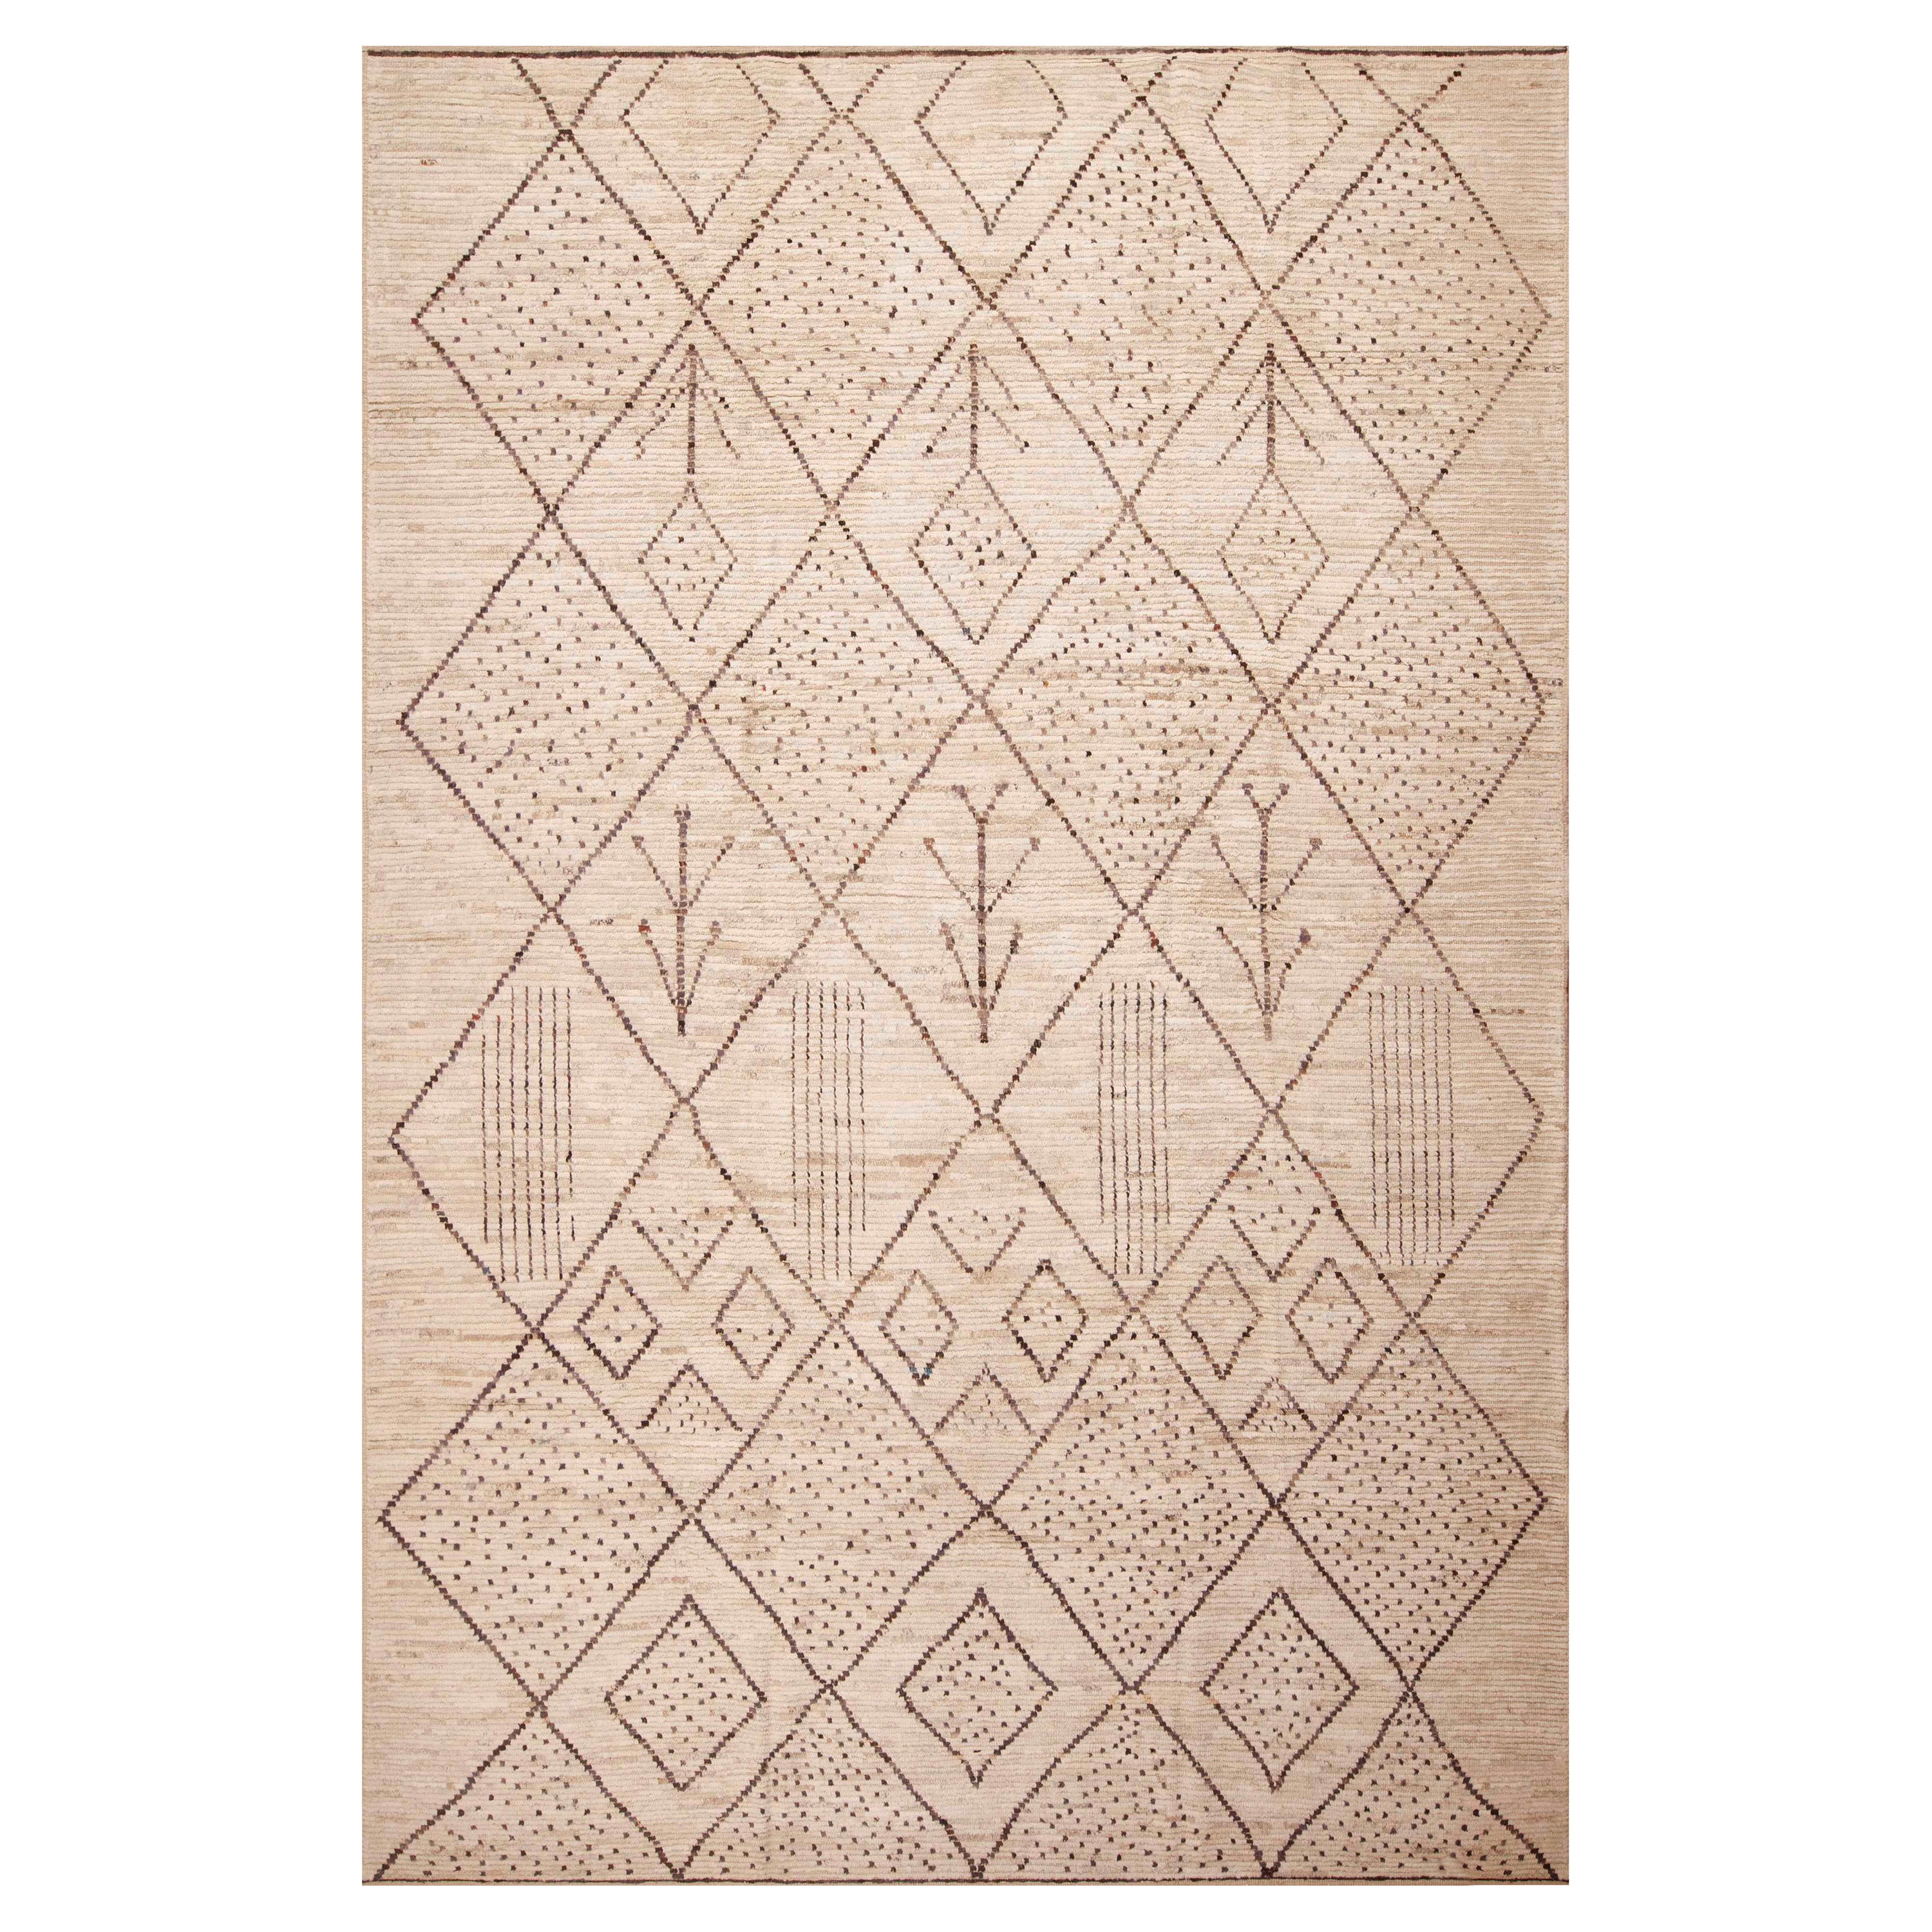 Nazmiyal Collection Tribal Moroccan Beni Ourain Design Modern Rug 14'6" x 9'9" For Sale